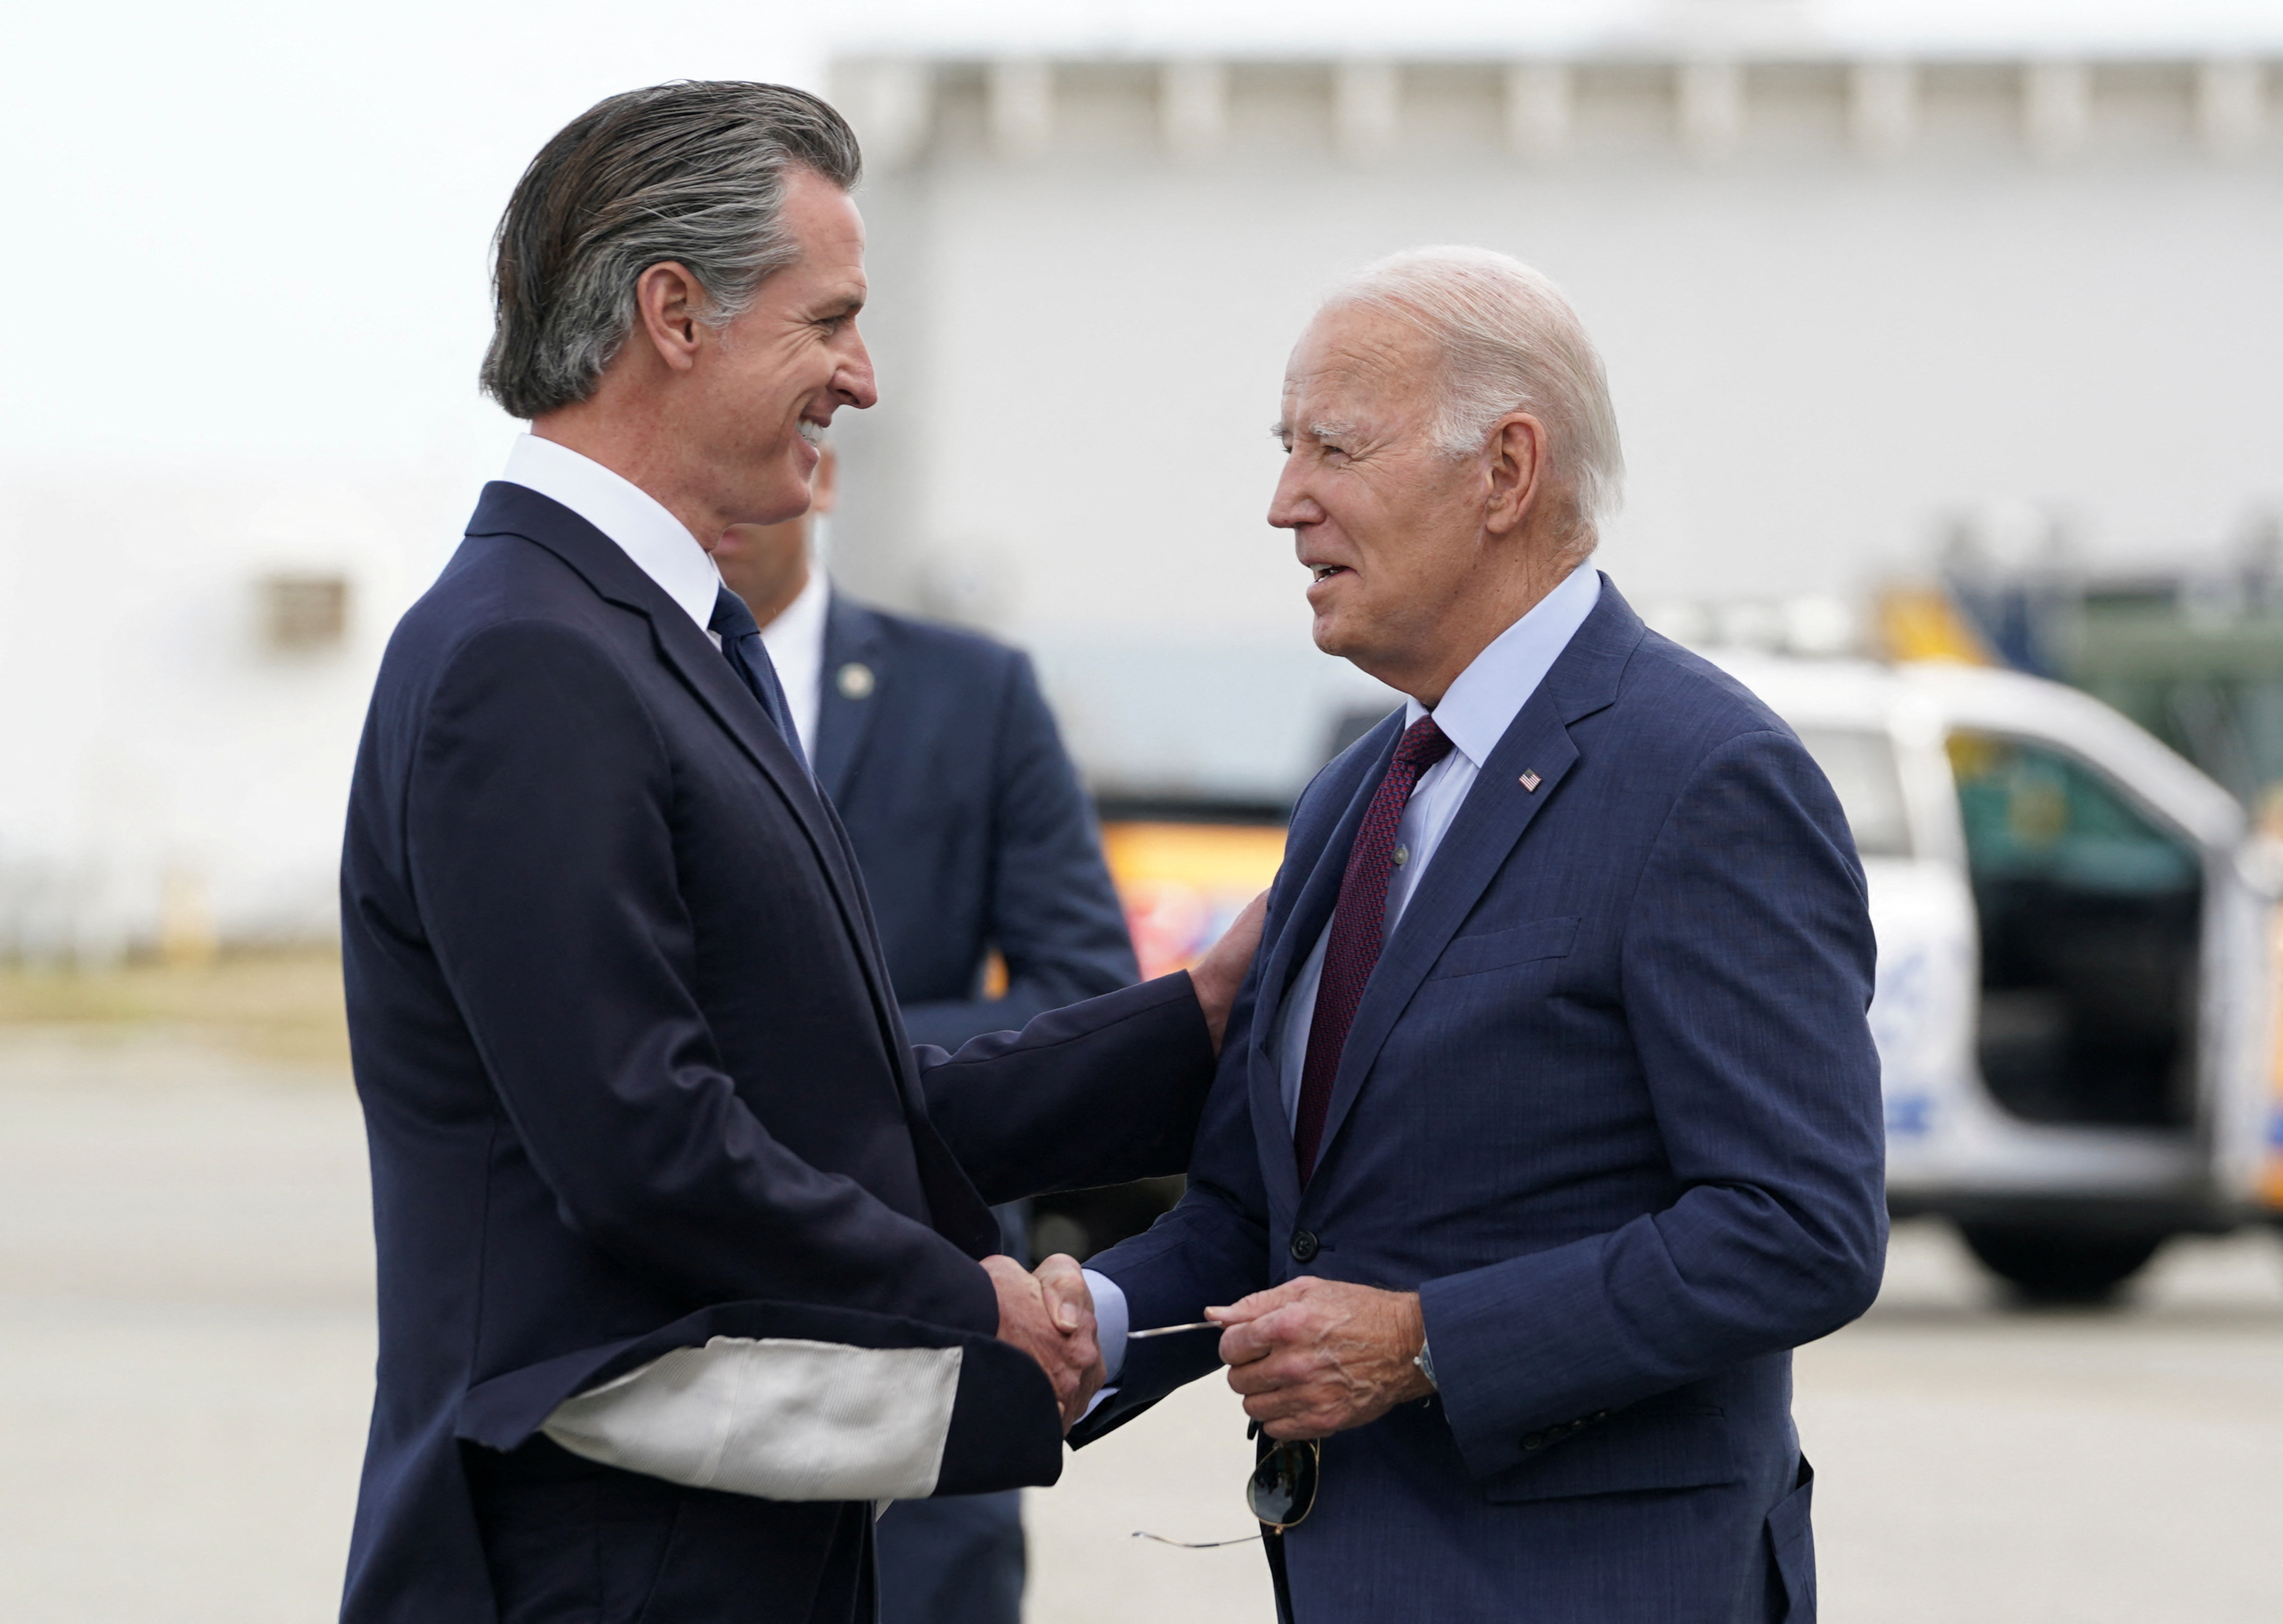 Biden arrives in San Francisco to host the APEC summit